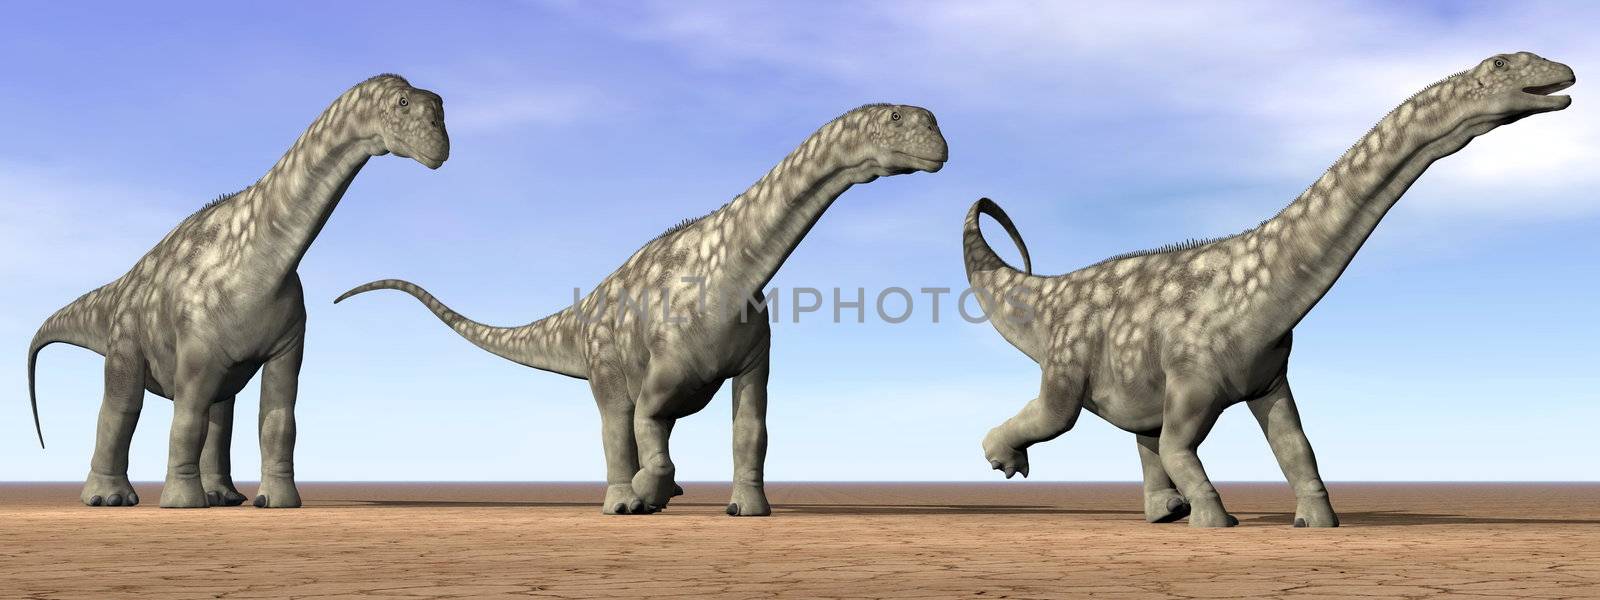 Argentinosaurus dinosaurs in the desert - 3D render by Elenaphotos21